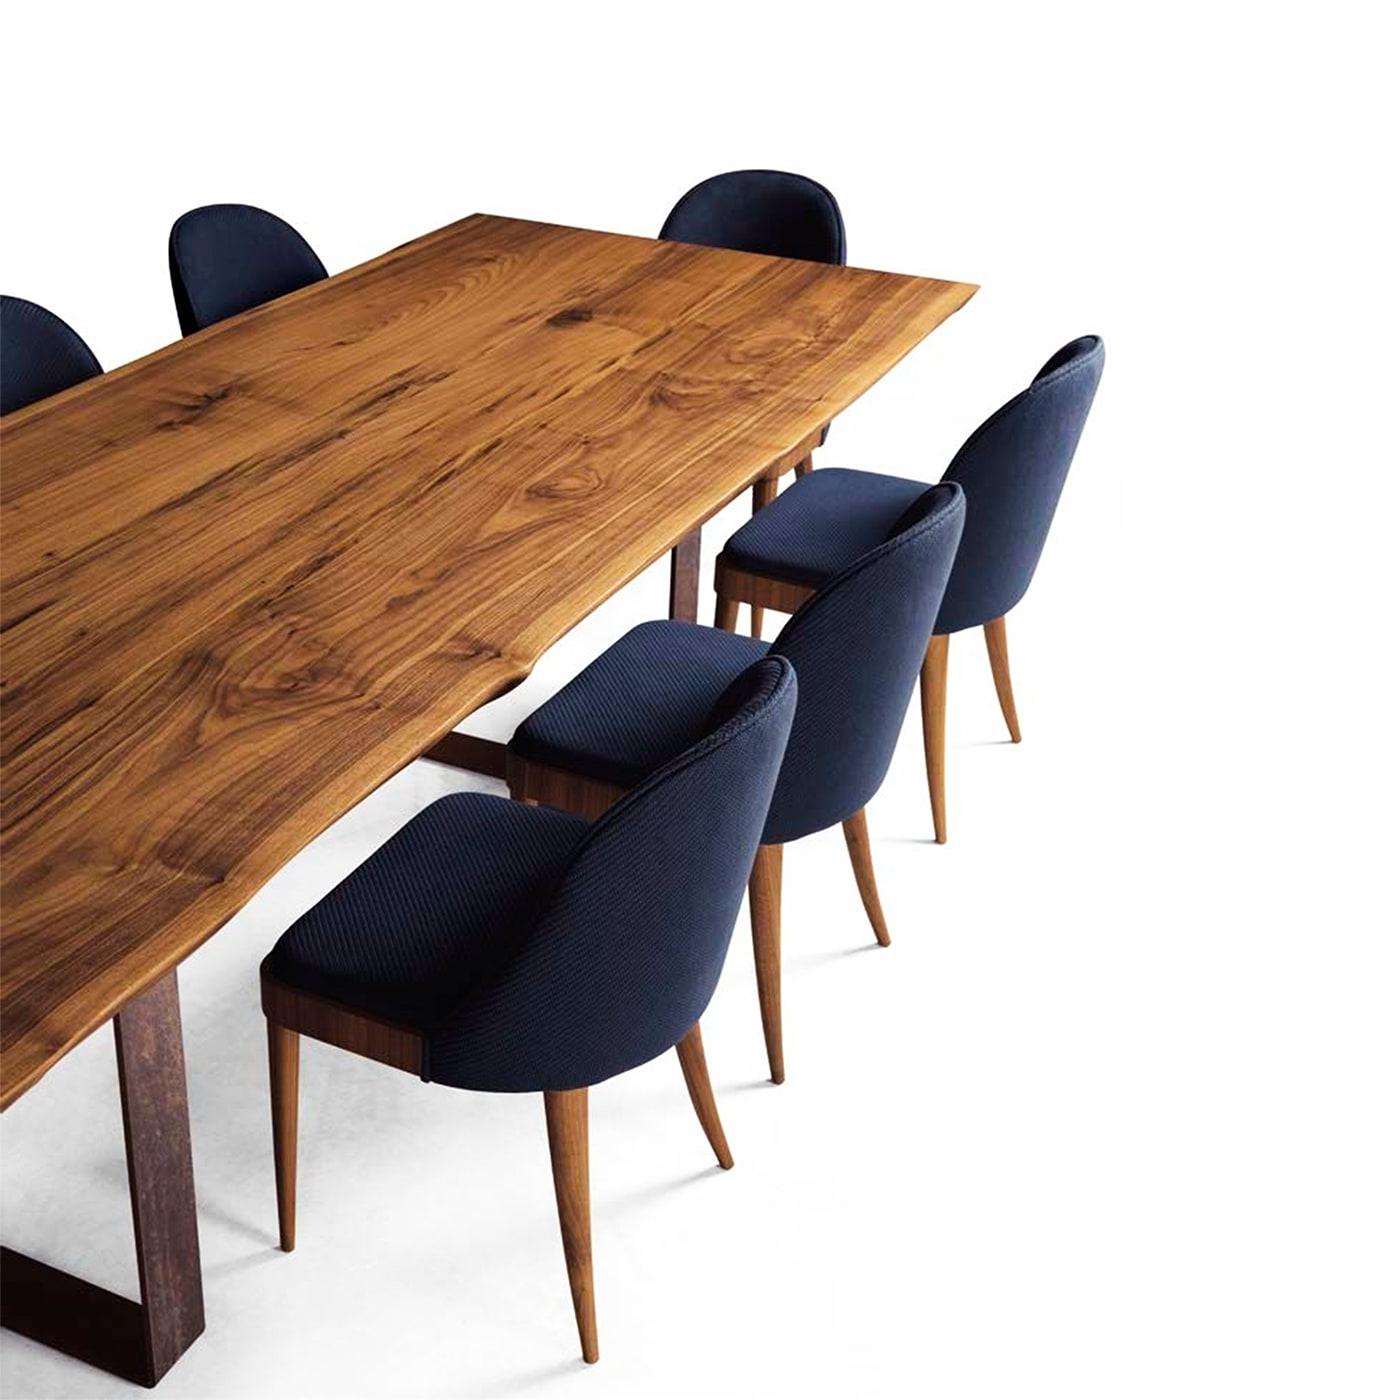 Misura Luxury Dining Table ☞ Dimensions: Length 350 cm